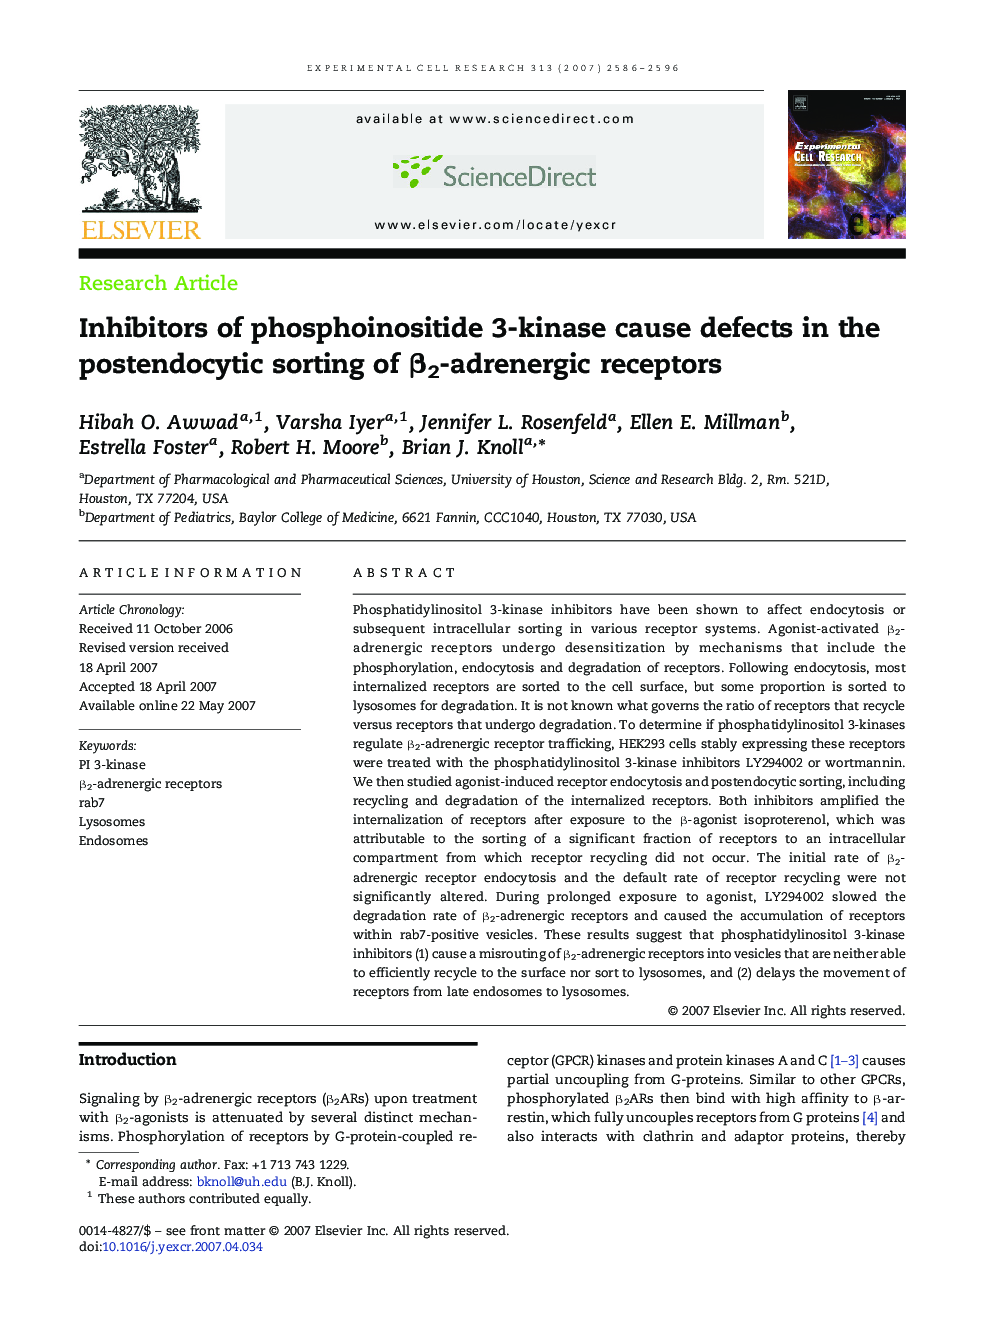 Inhibitors of phosphoinositide 3-kinase cause defects in the postendocytic sorting of β2-adrenergic receptors